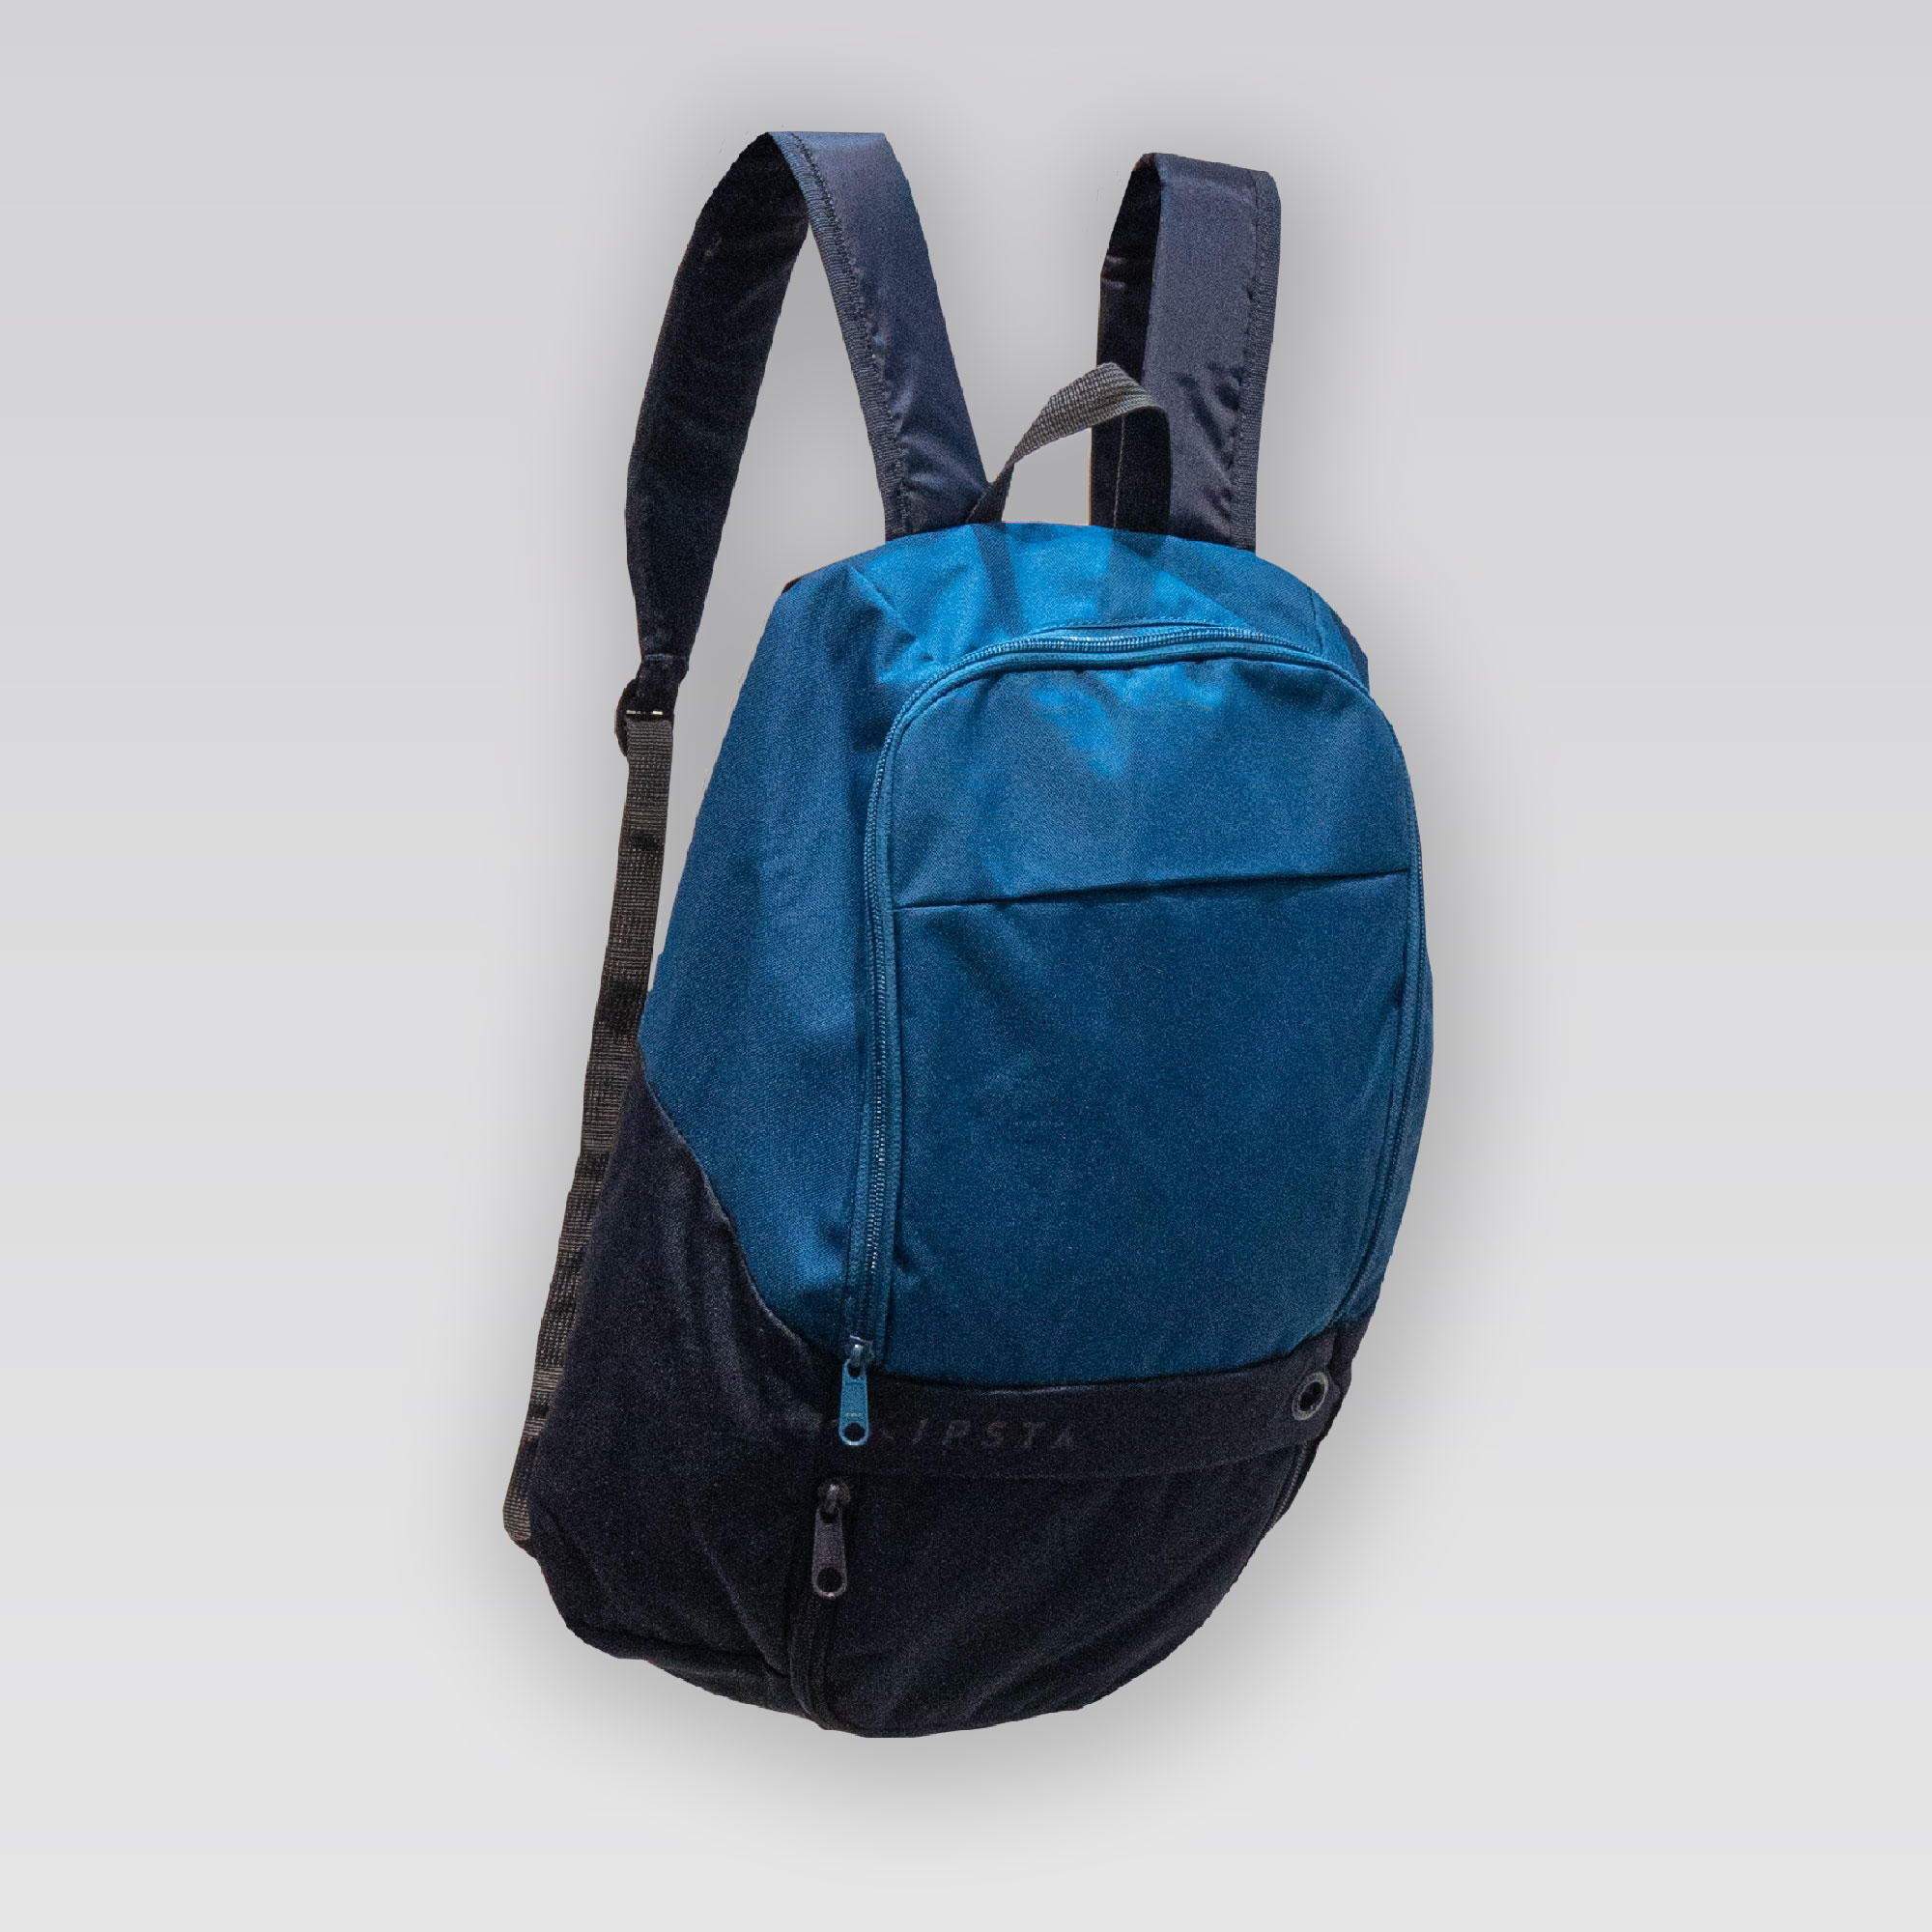 Buy Sports Backpack 25L With Laptop Pocket Burgundy Red Online | Decathlon